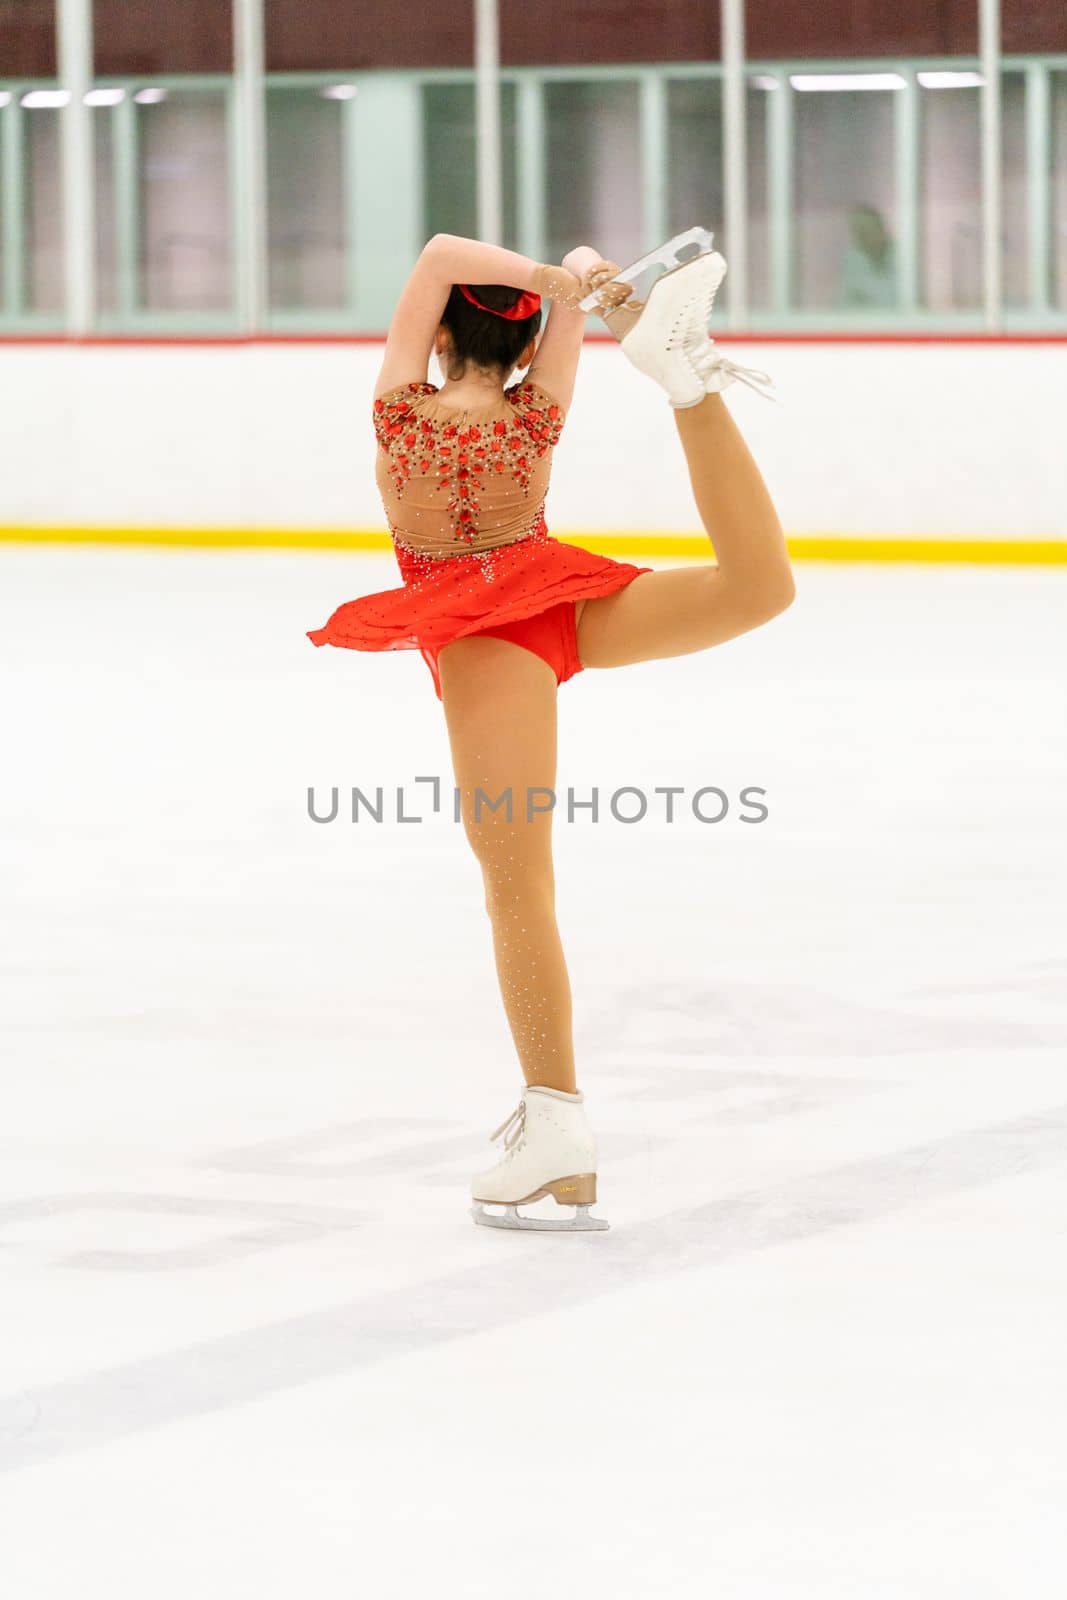 Teenage girl practicing figure skating on an indoor ice skating rink.